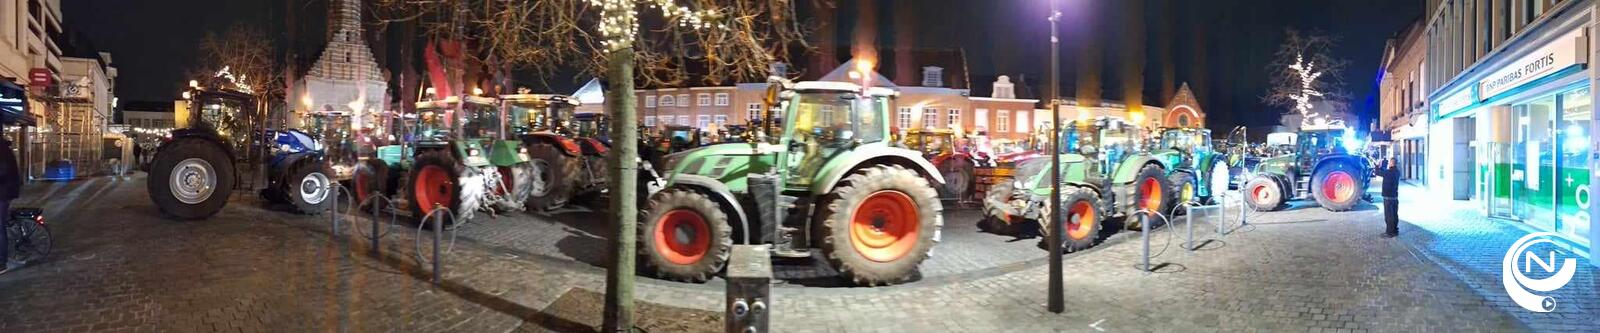 Boerenprotest Herentals Markt